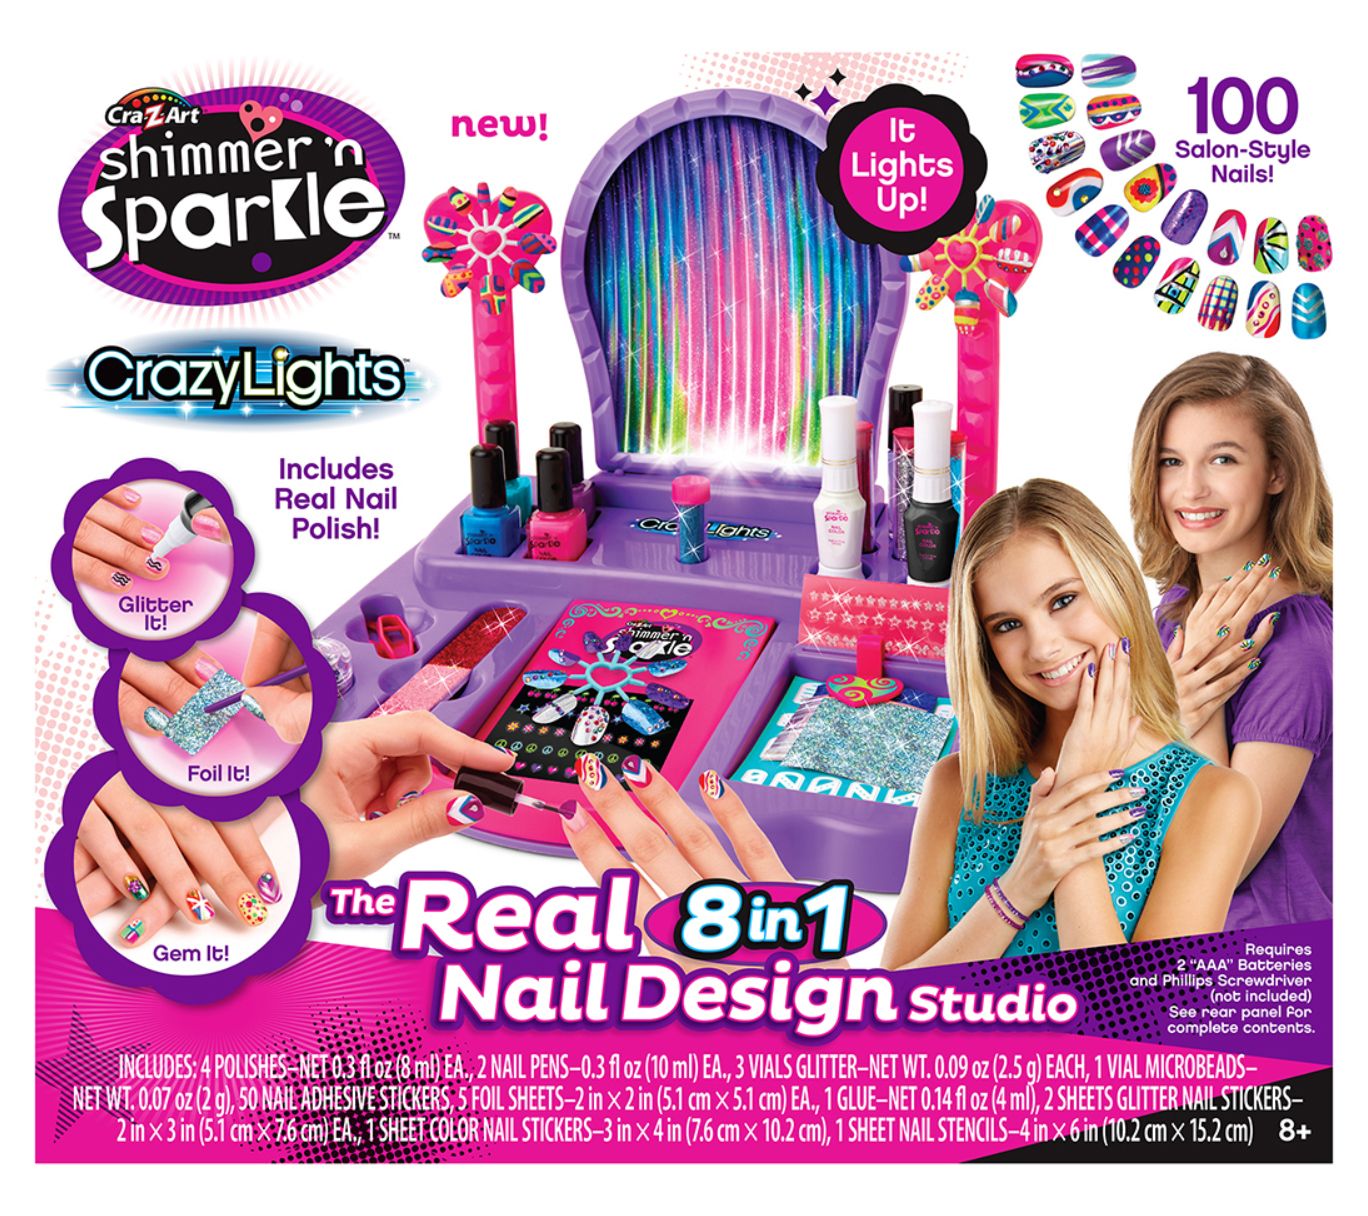 Cra-Z-Art Shimmer 'N Sparkle Crazy Lights 8-in- 1 Nail Art Kit 